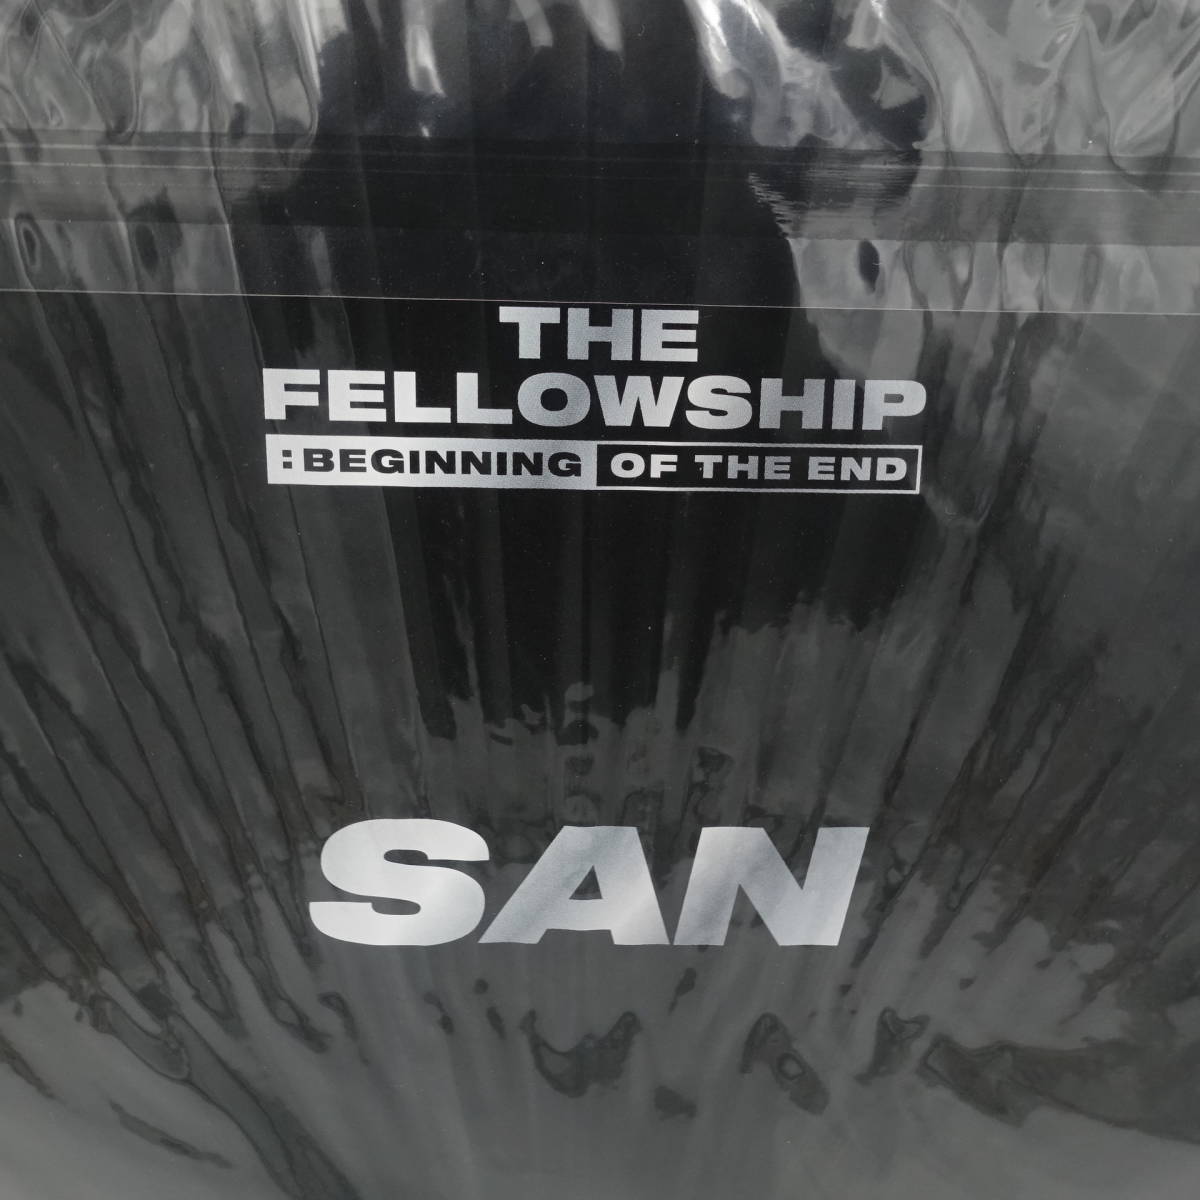 ATEEZ солнечный World Tour The Fellowship:BEGINNING OF THE END веер "uchiwa" SAN нераспечатанный ei чай zachiz/13719